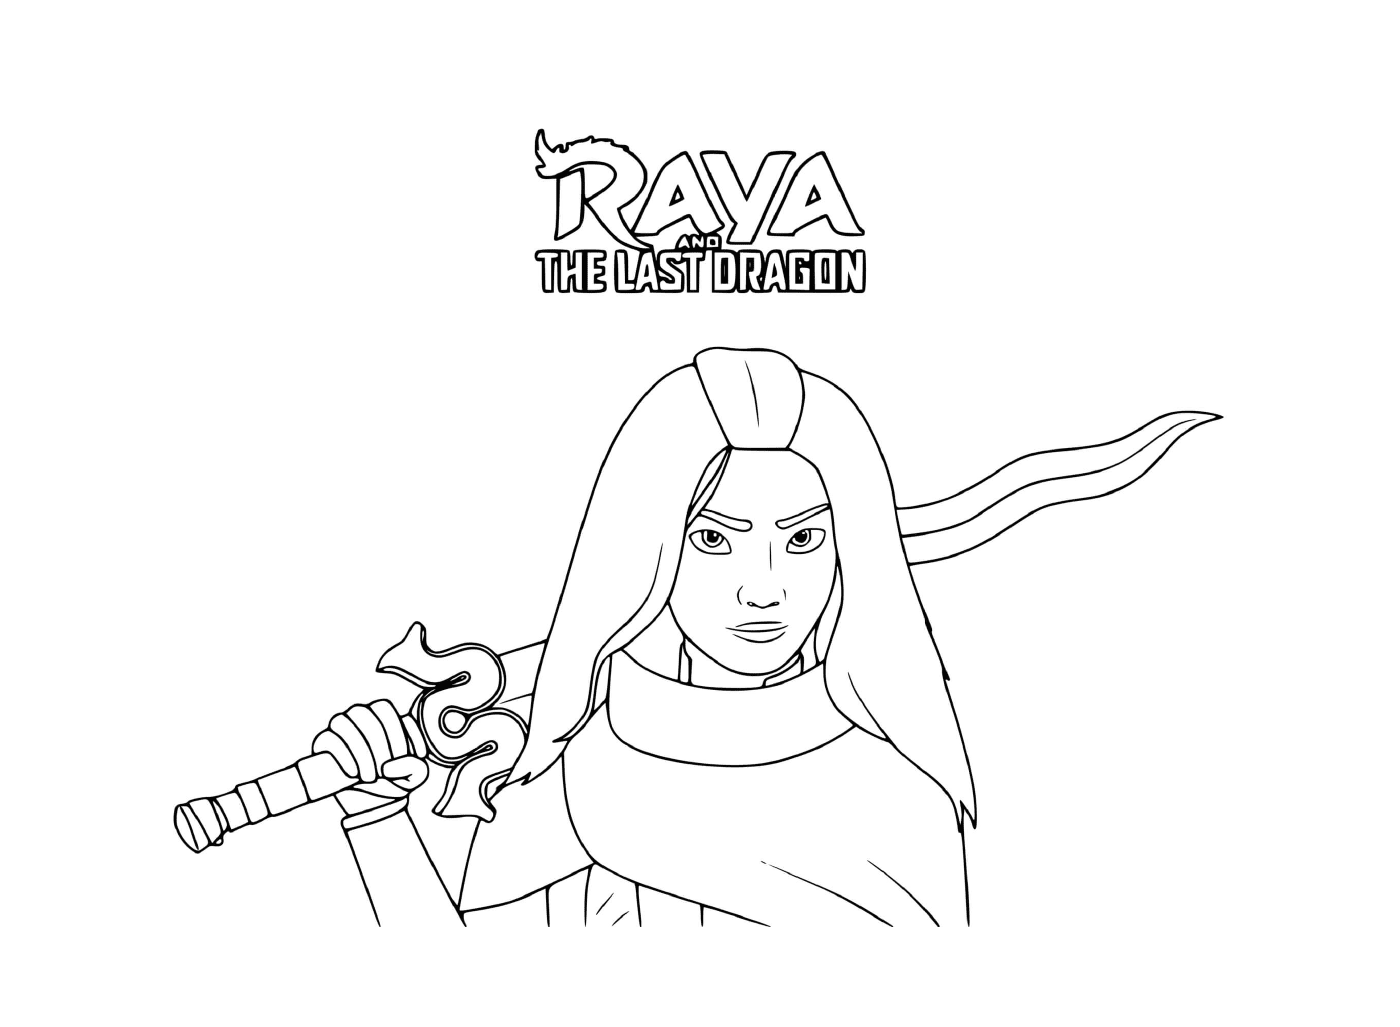  A princesa Raya e sua espada 